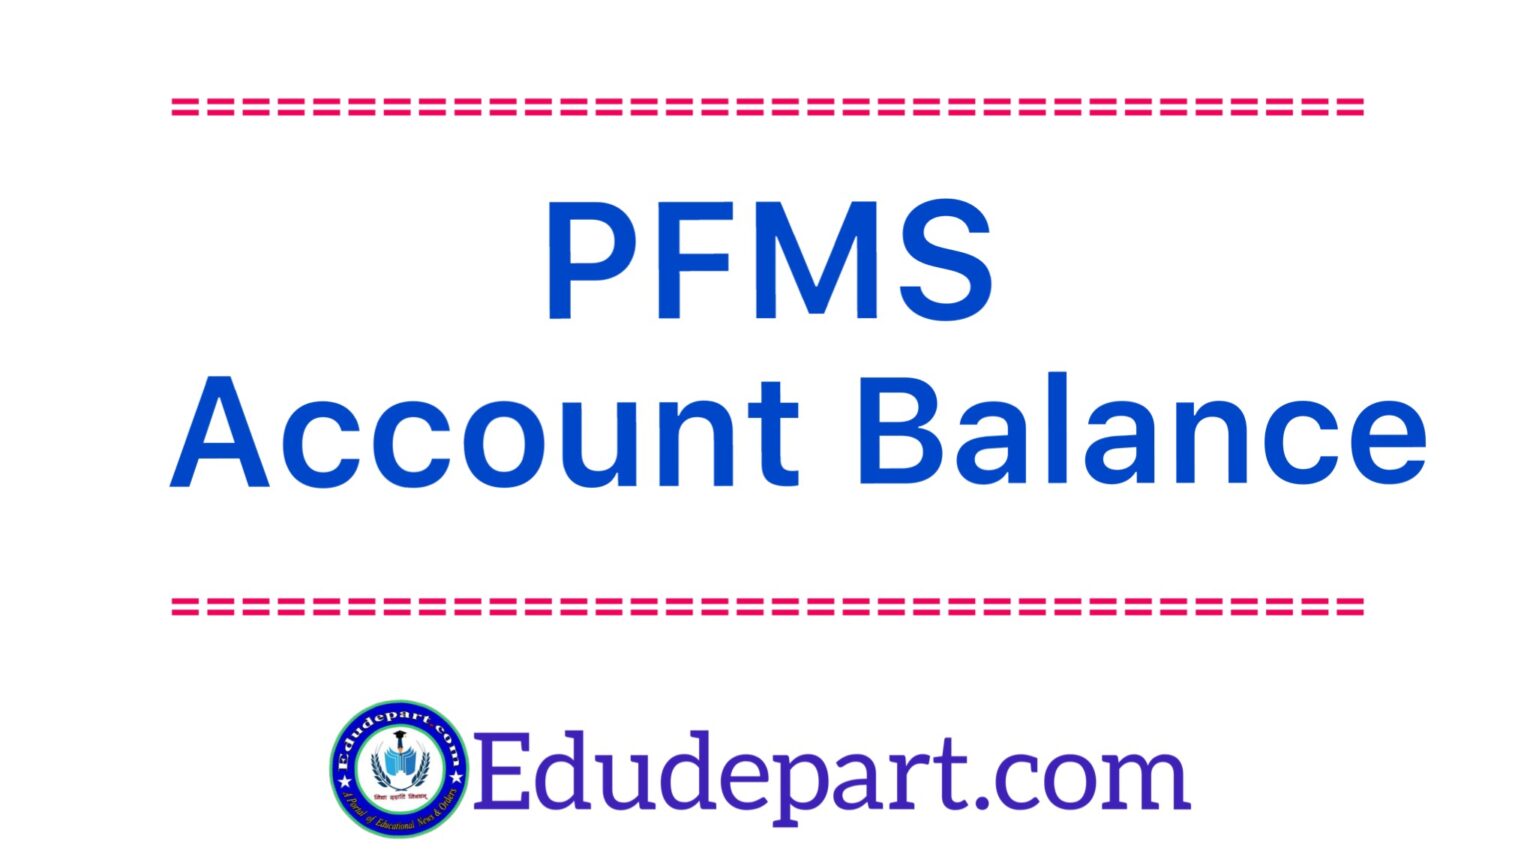 pfms-account-balance-.jpg